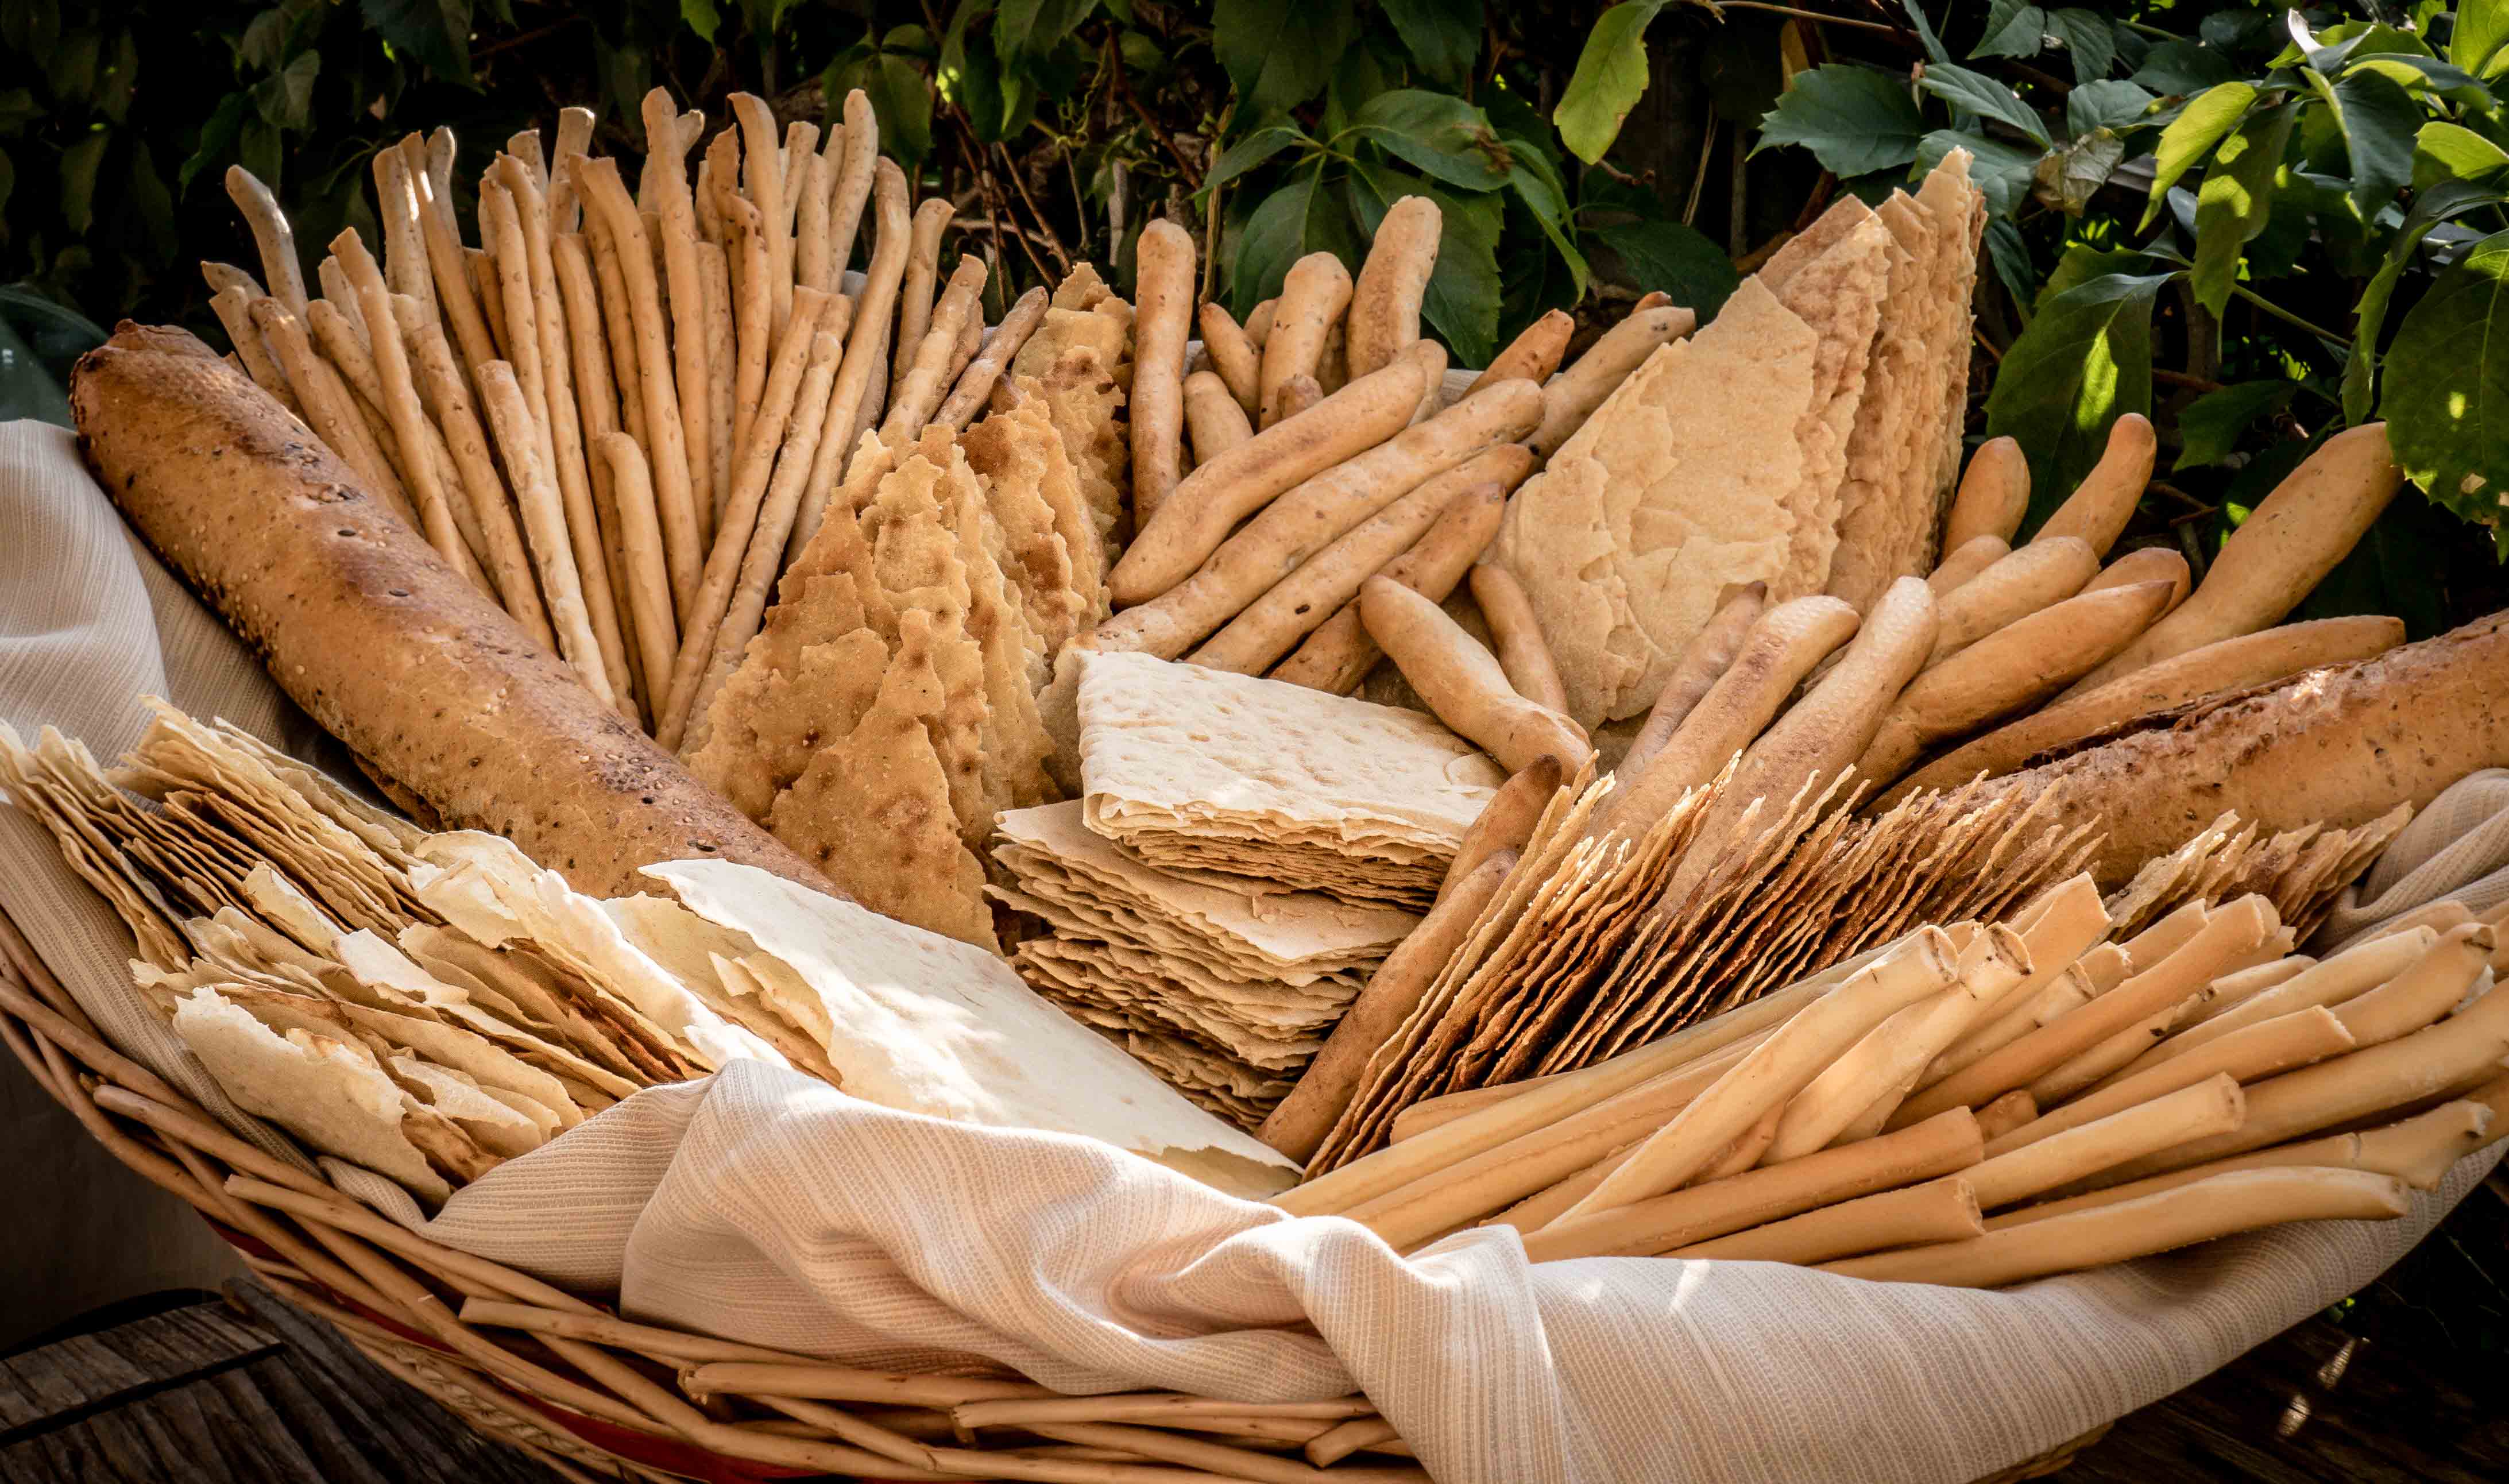 Discover The Bread Of Sardinia